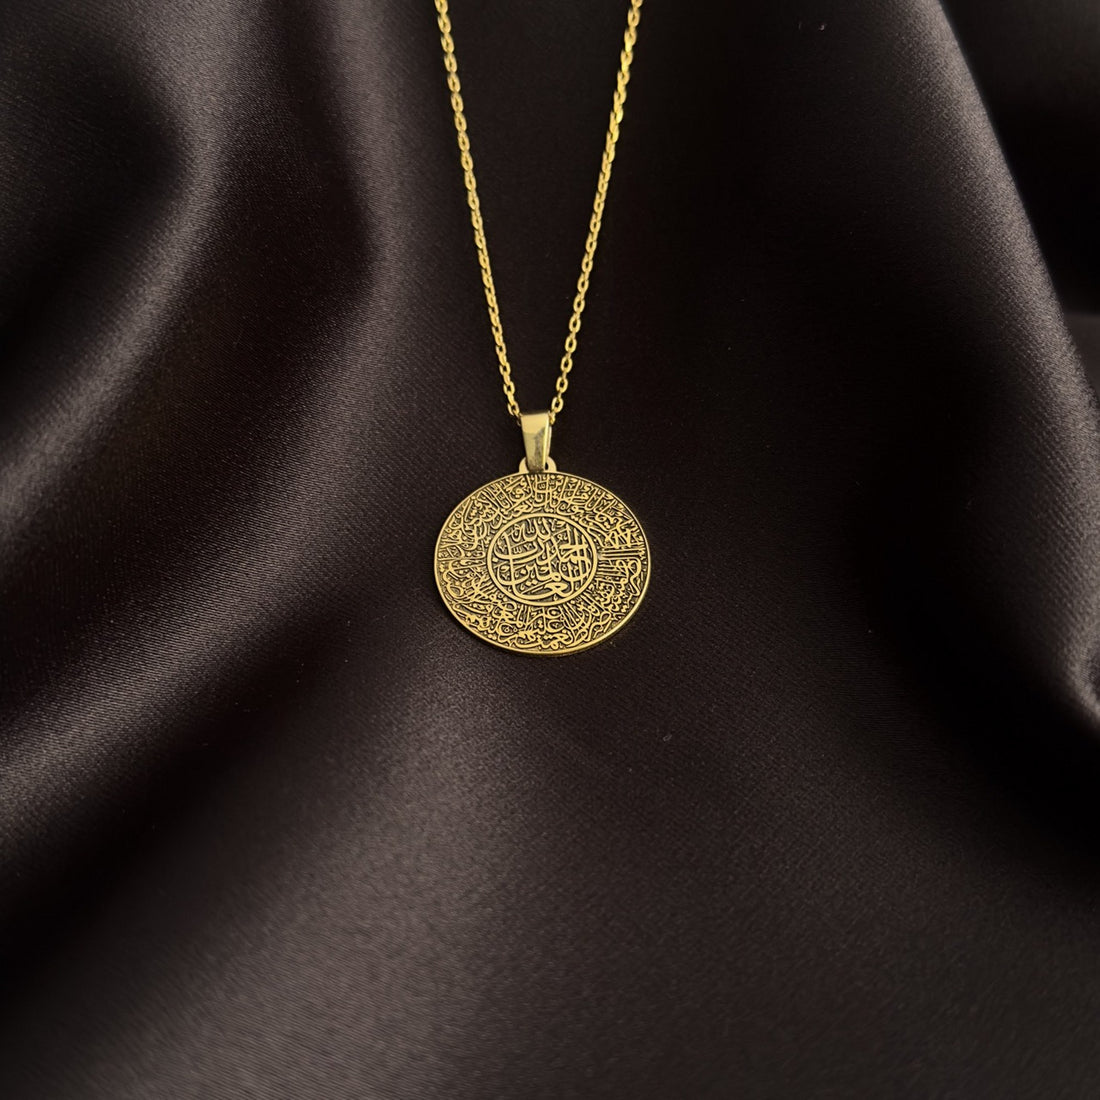 islamic-jewelry-surah-fatiha-circular-islamic-necklace-18k-gold-pendant-on-925-silver-timeless-design-for-devotion-shukranislamicart